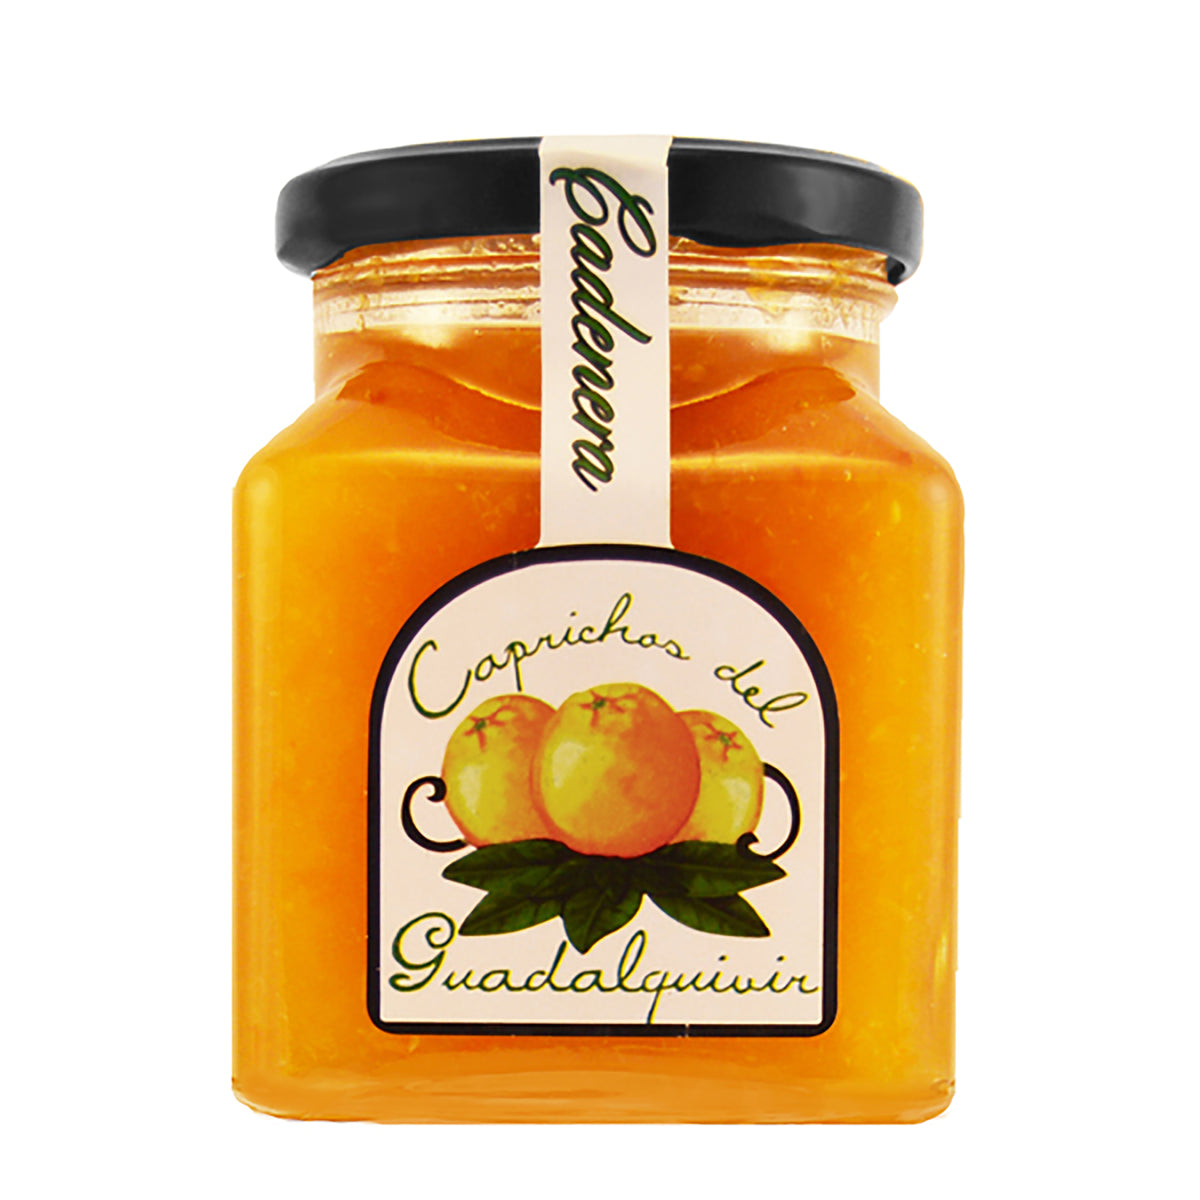 Spanish Cadenera Orange Marmalade